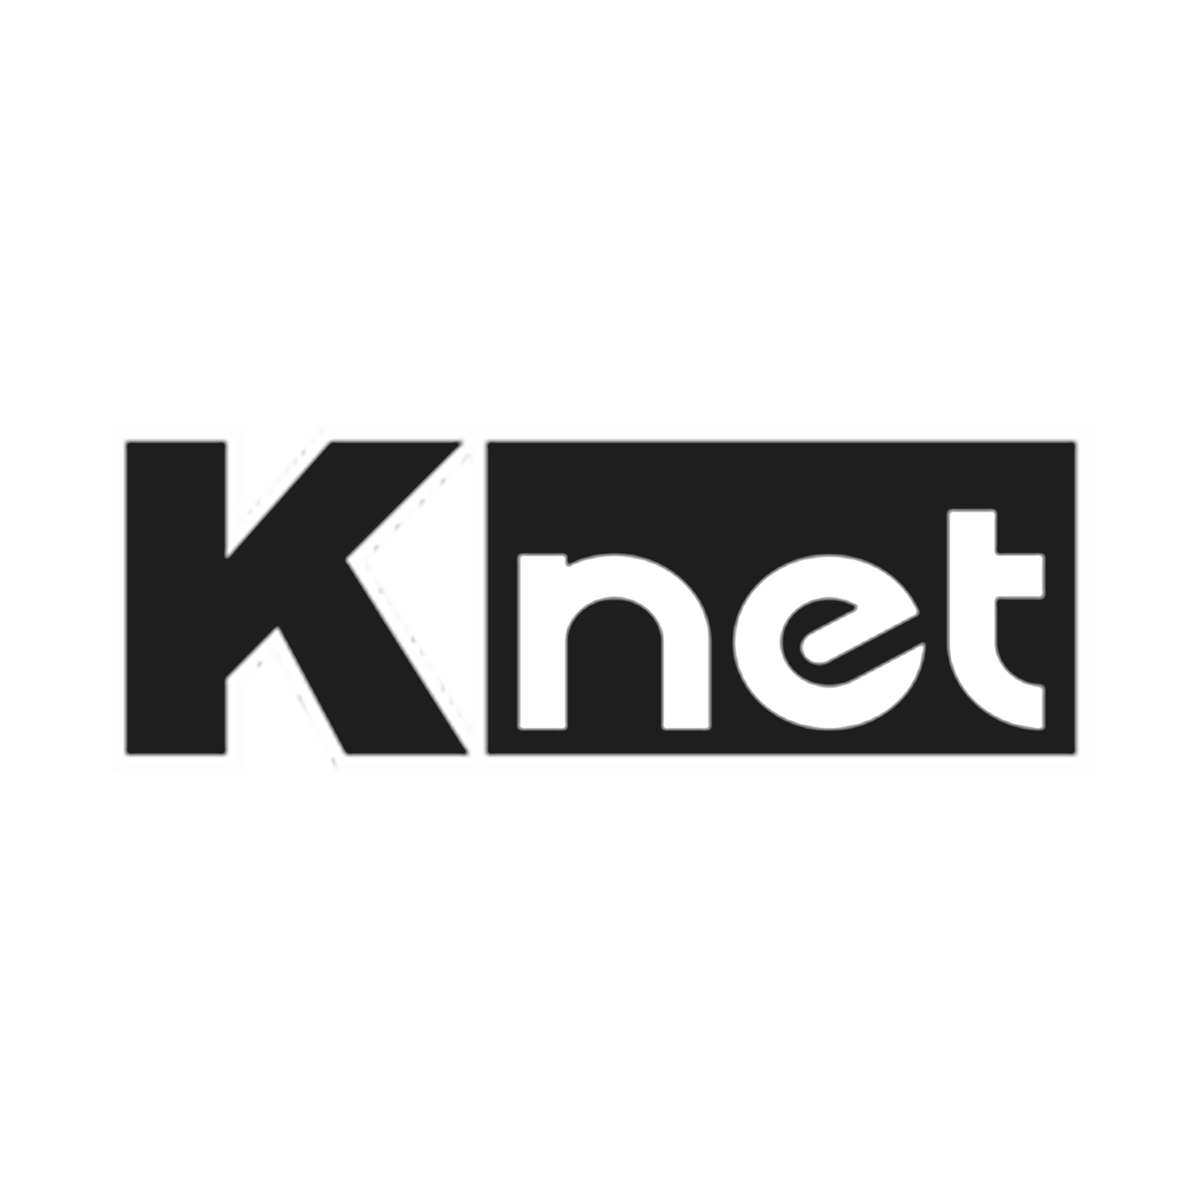 Knet